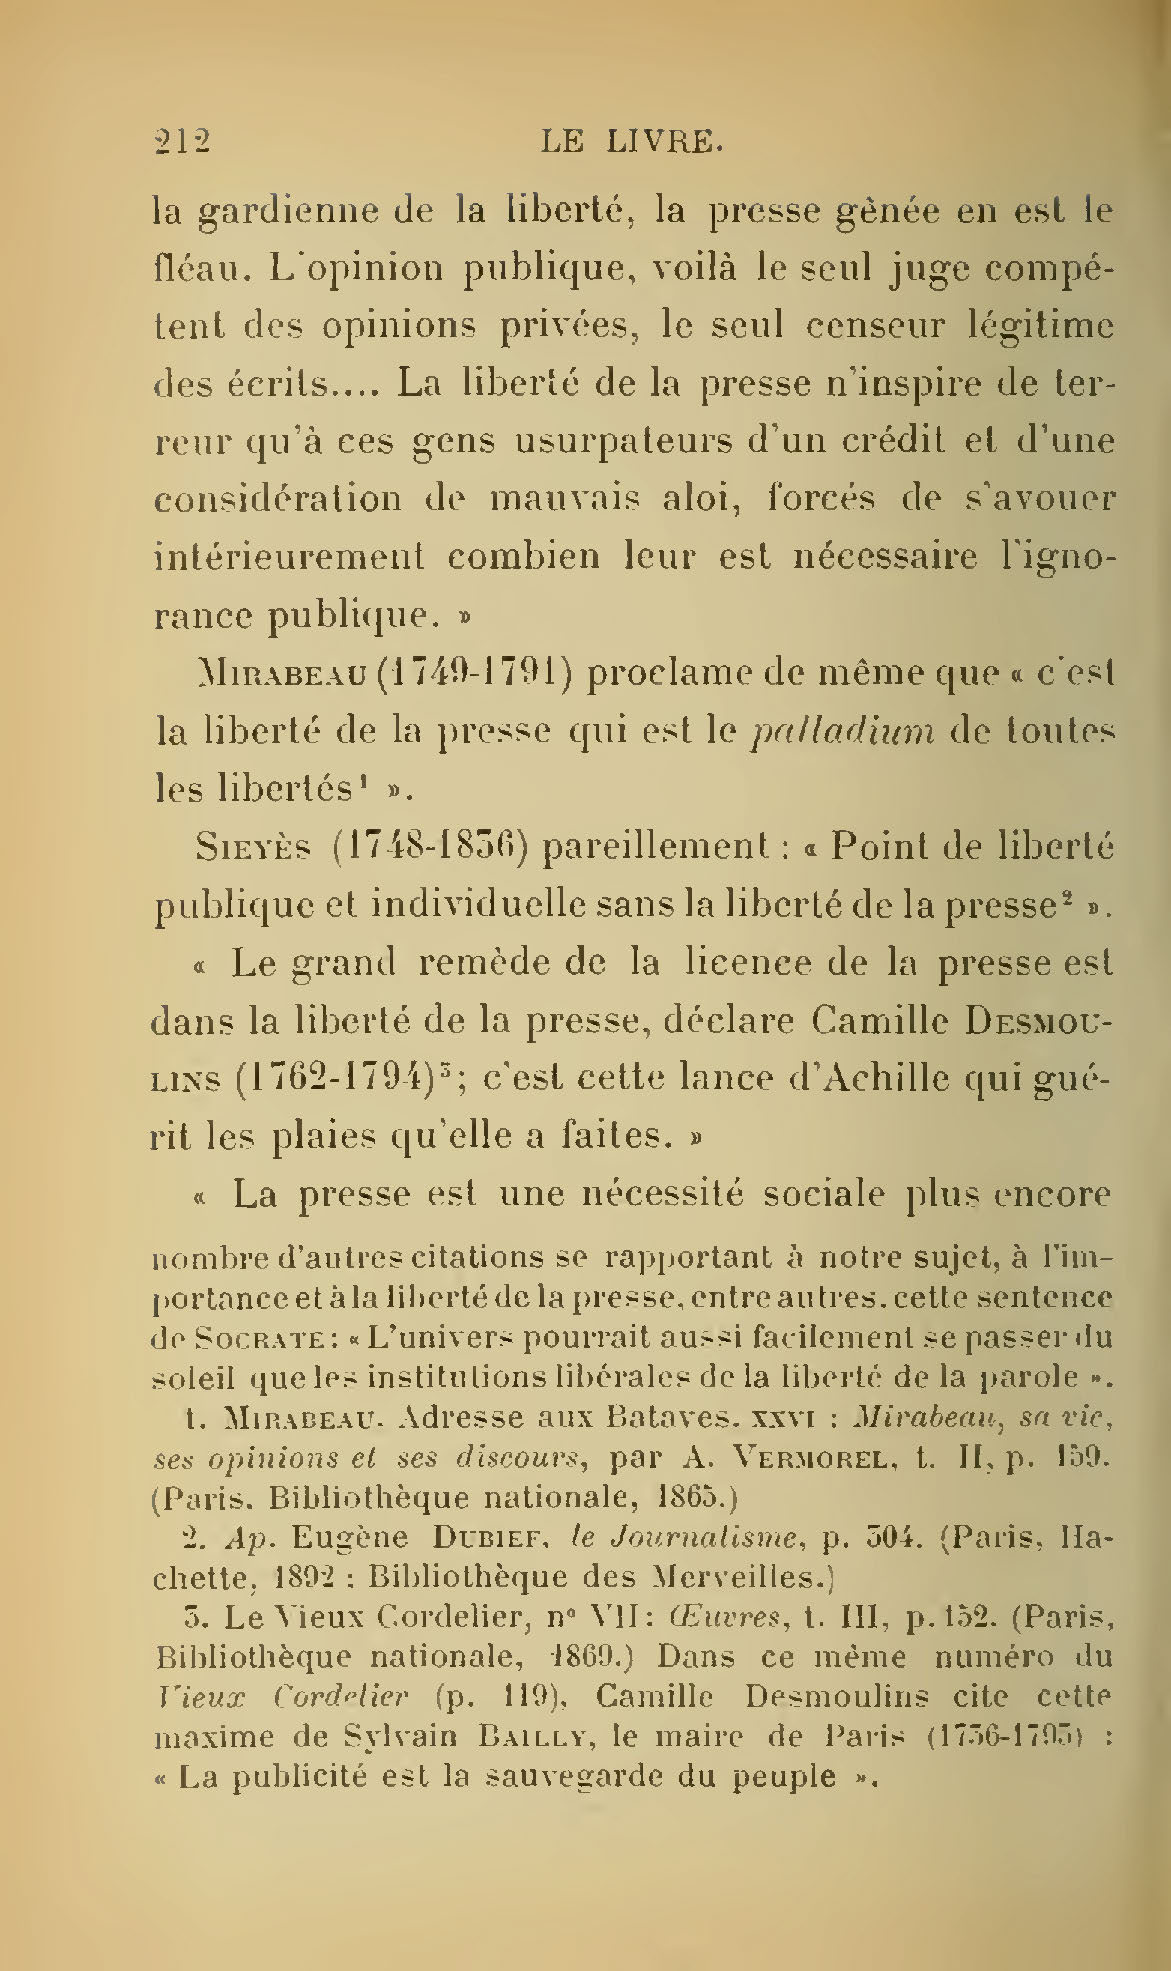 Albert Cim, Le Livre, t. II, p. 212.